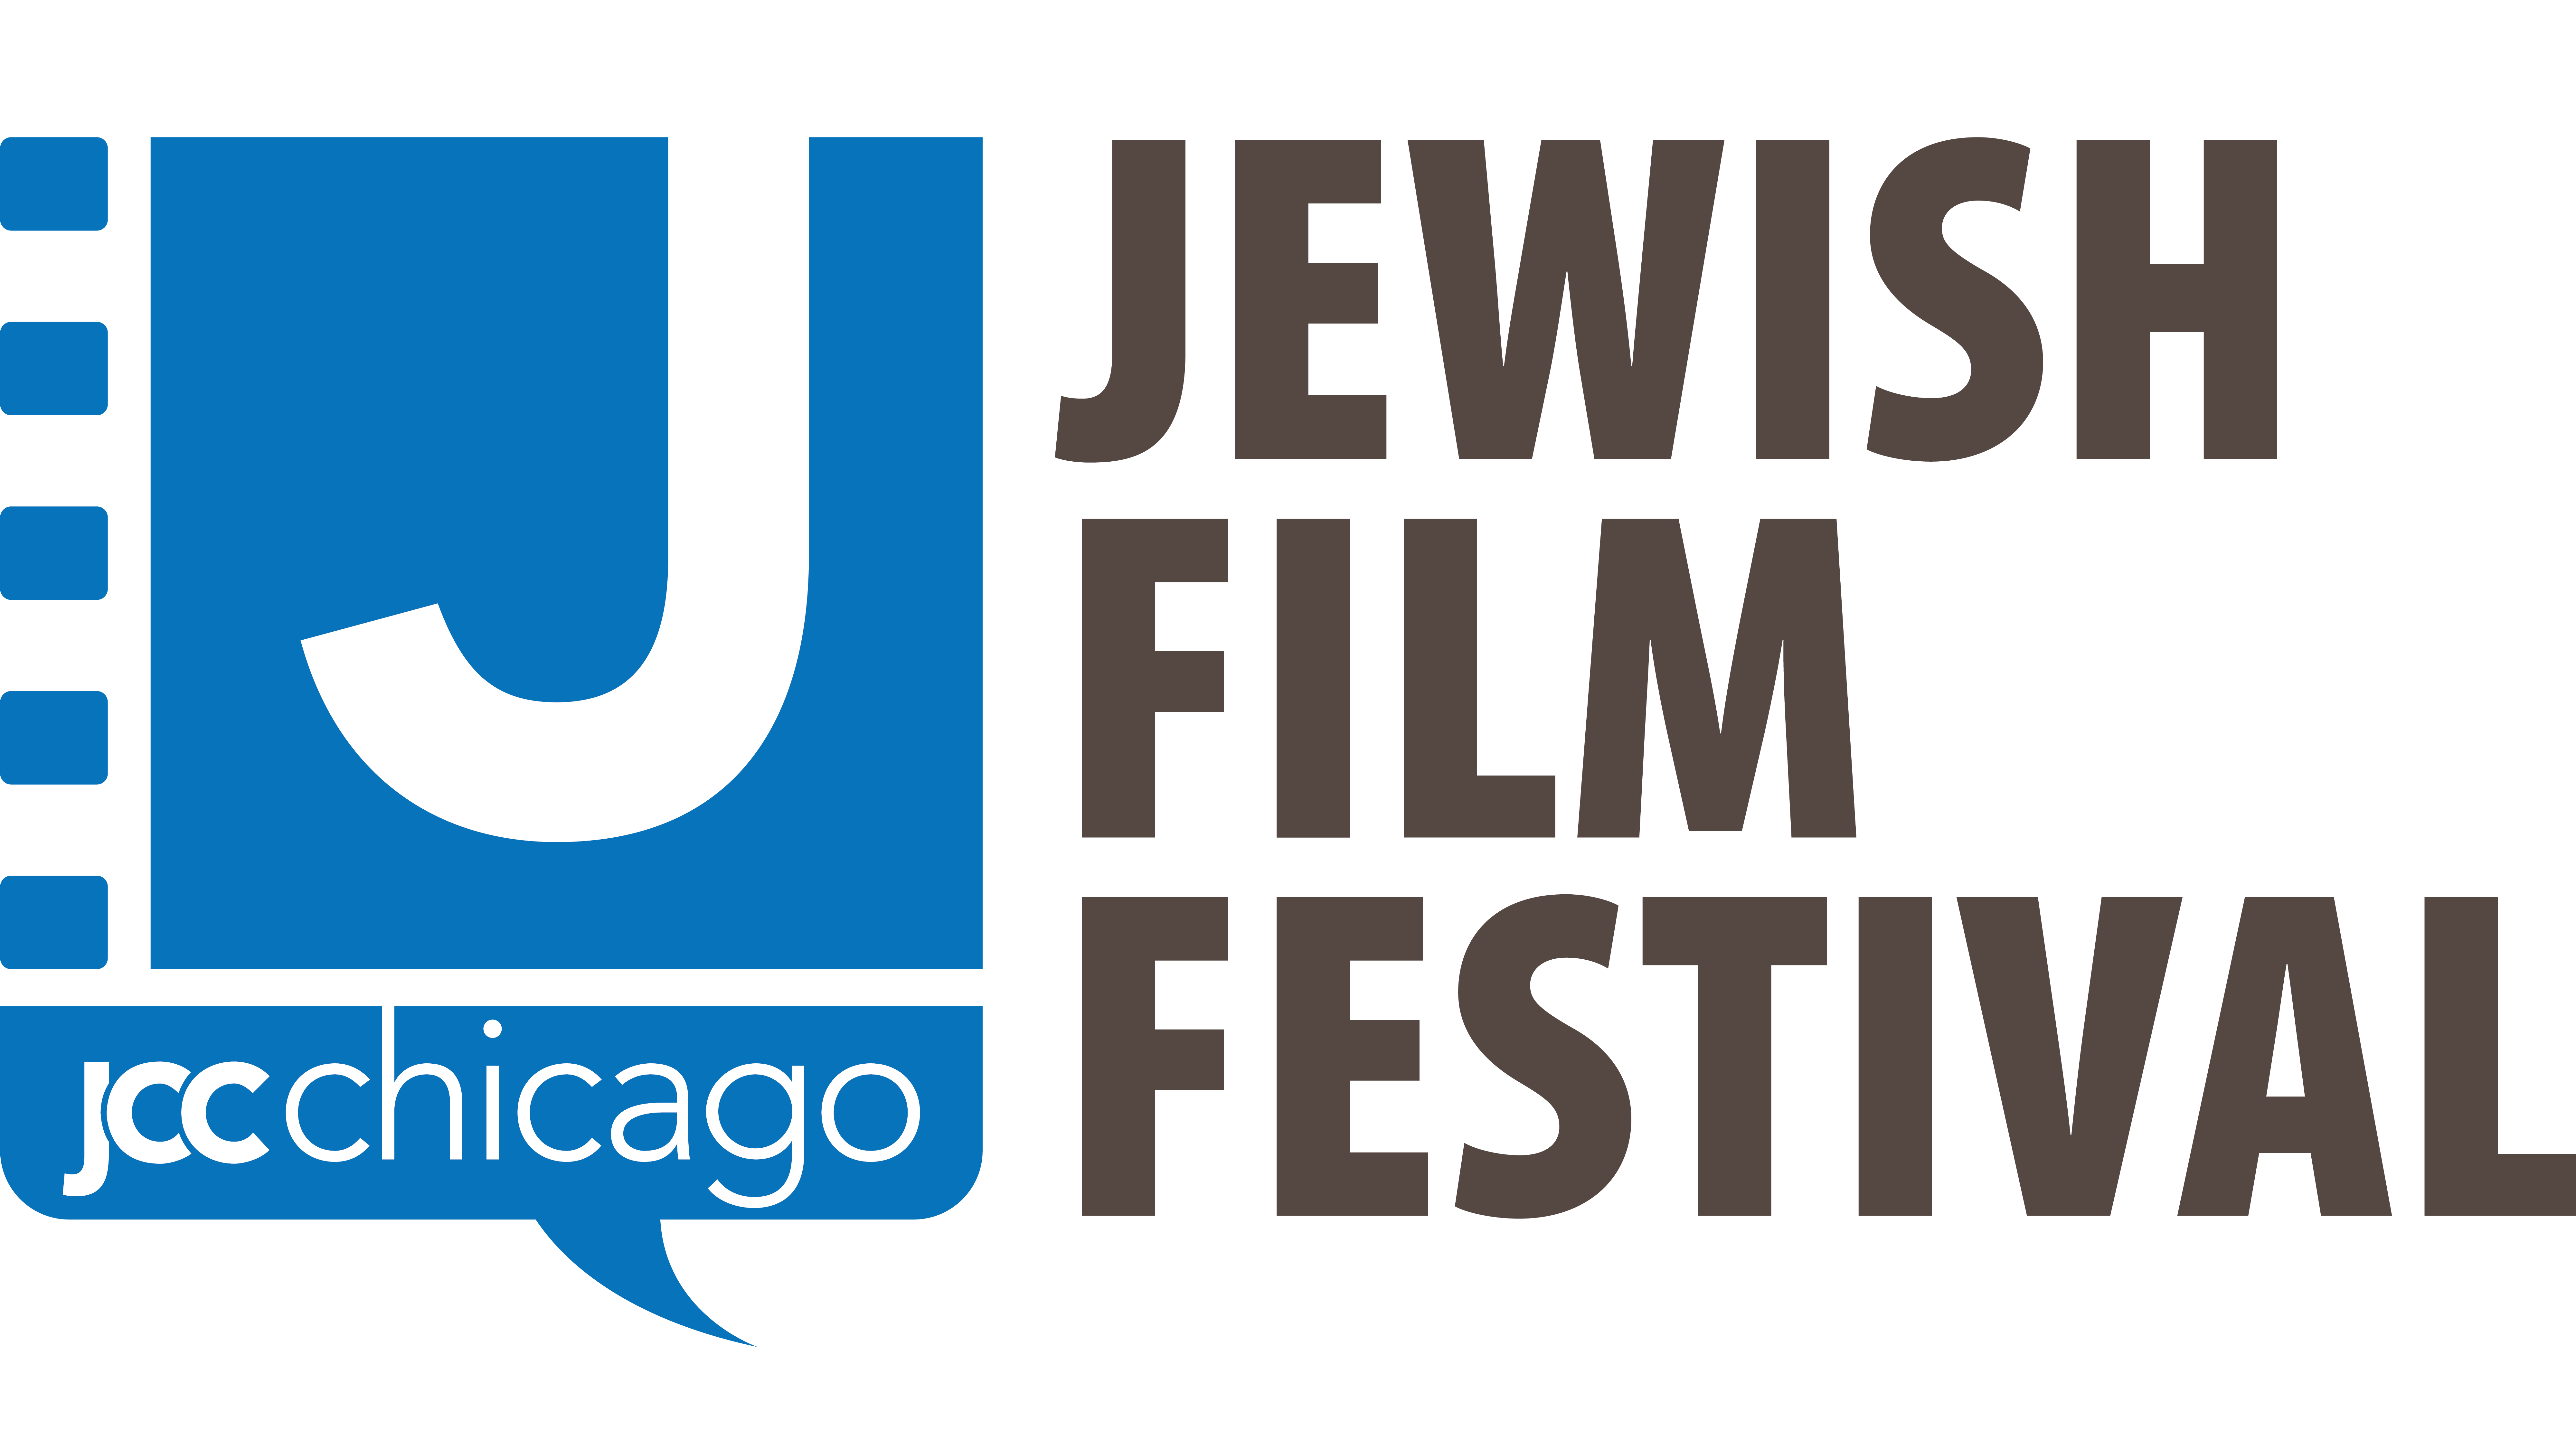 2021 JCC Chicago Jewish Film Festival